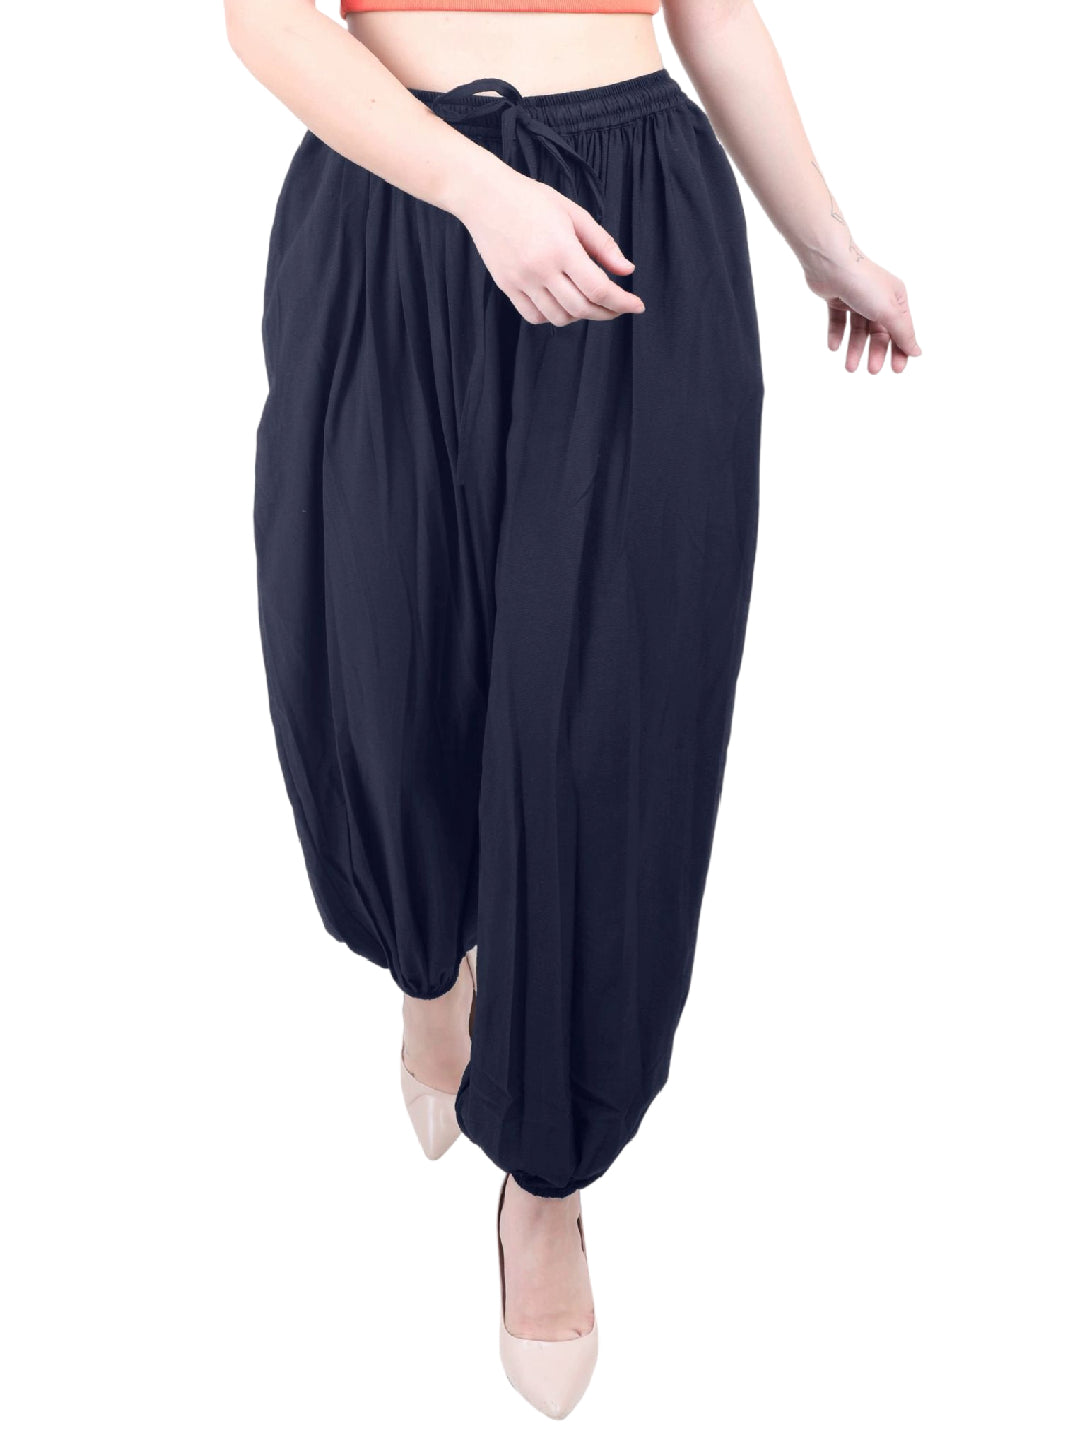 Buy Online Men Women 100% Cotton Baggy Boho Aladin Yoga Harem Pants (Olive  Green) - Zifiti.com 480742